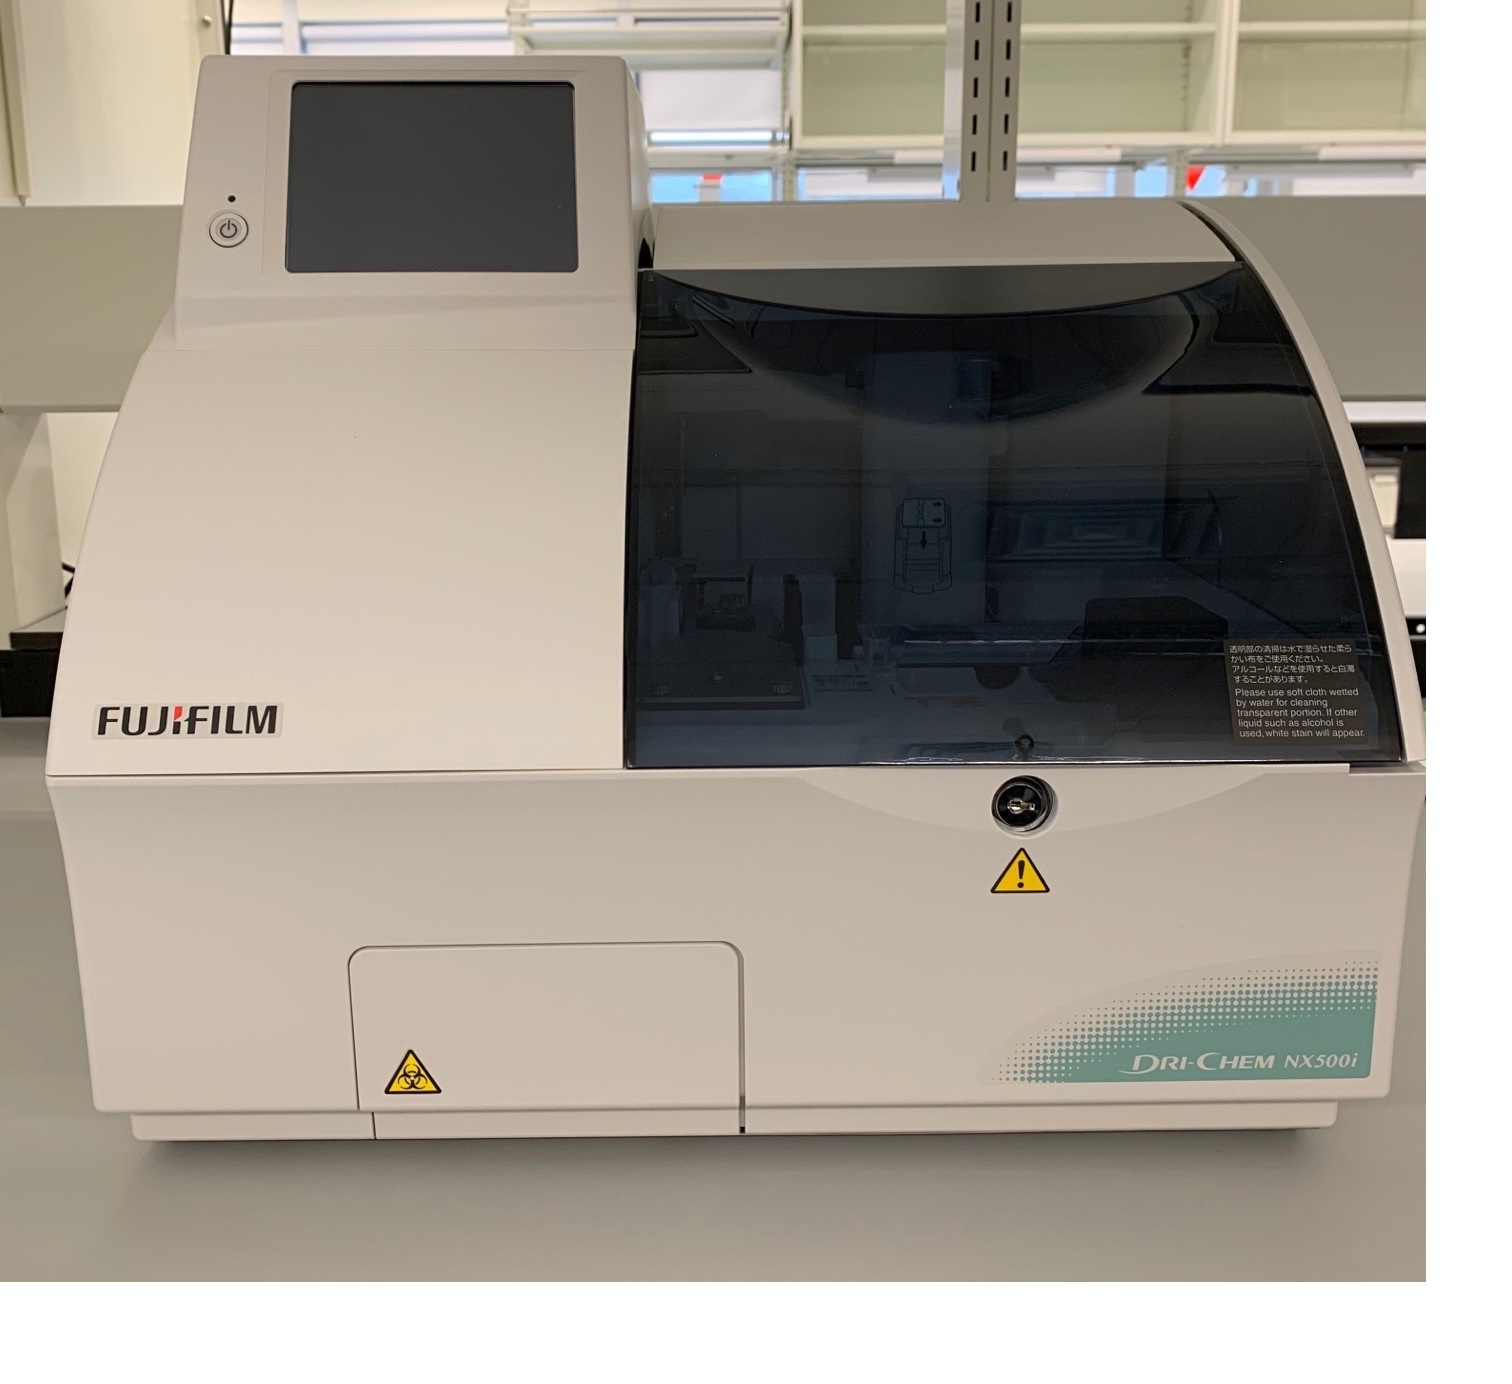 16-乾式生化分析儀 (FUJIFILM DRI-CHEM NX500i)